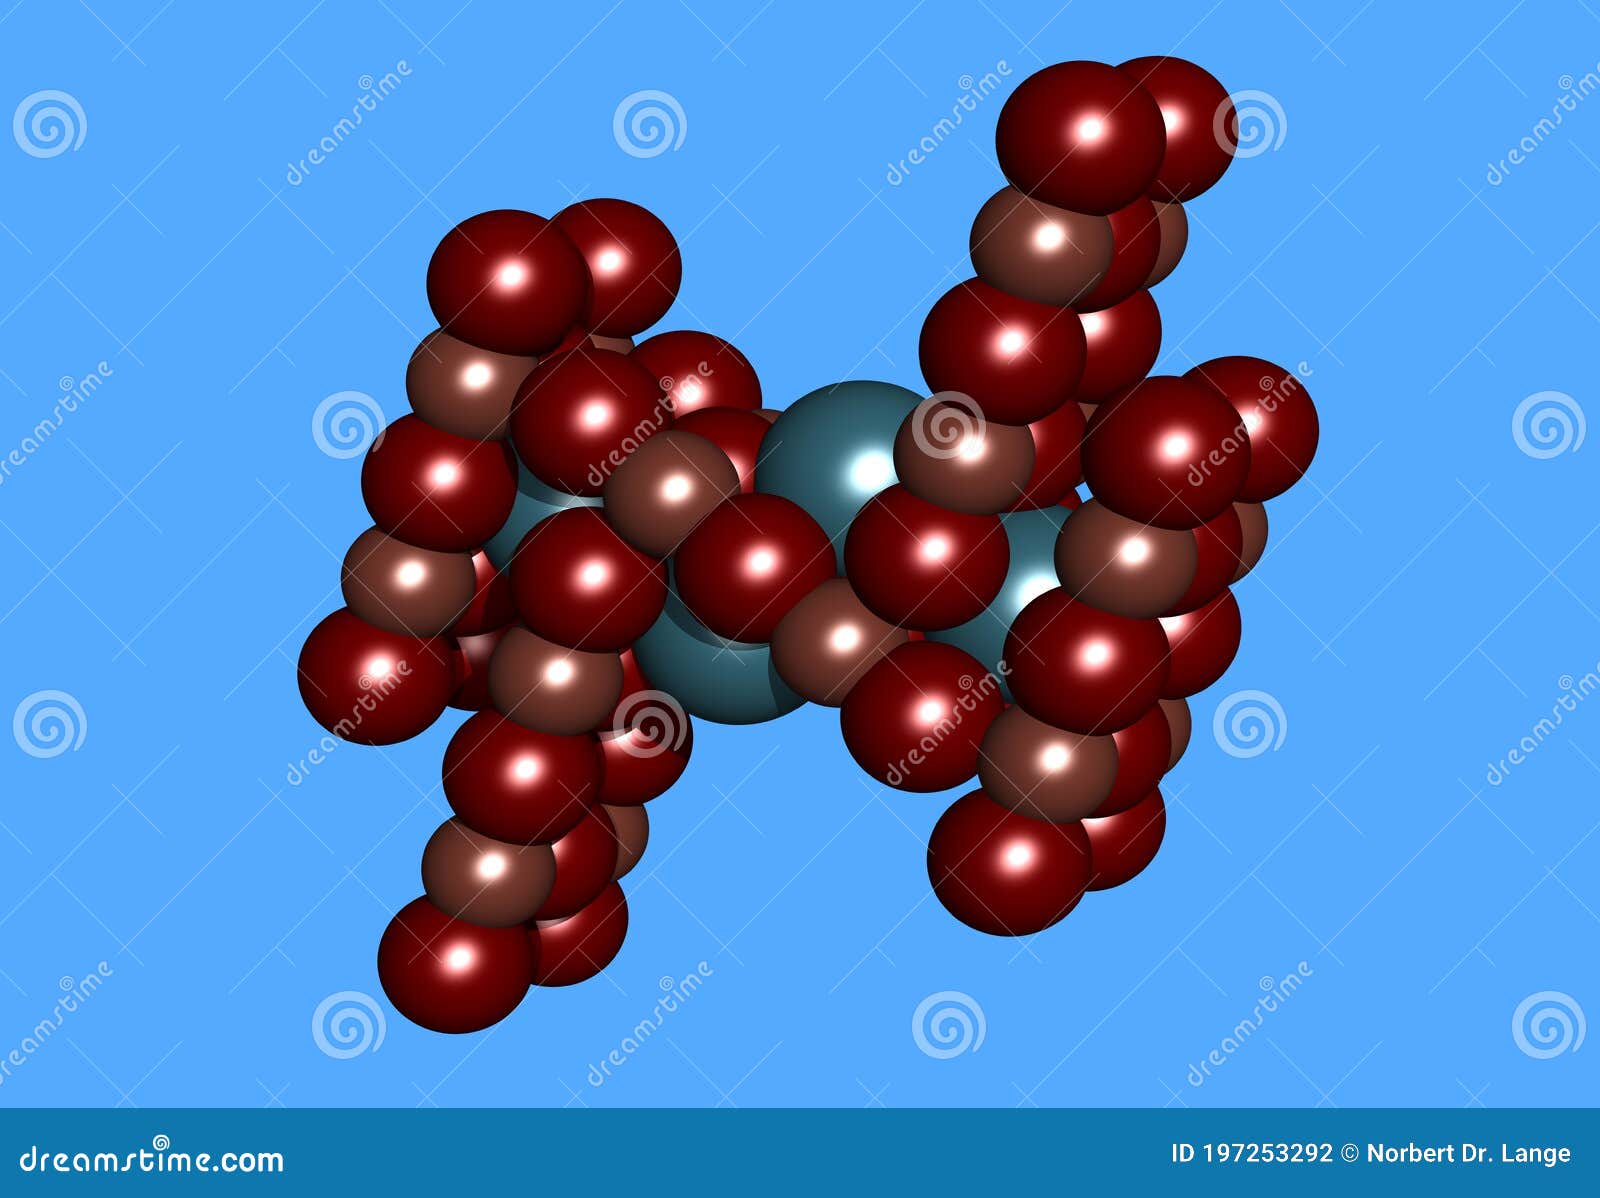 lanthan kupfer oxid molecular model